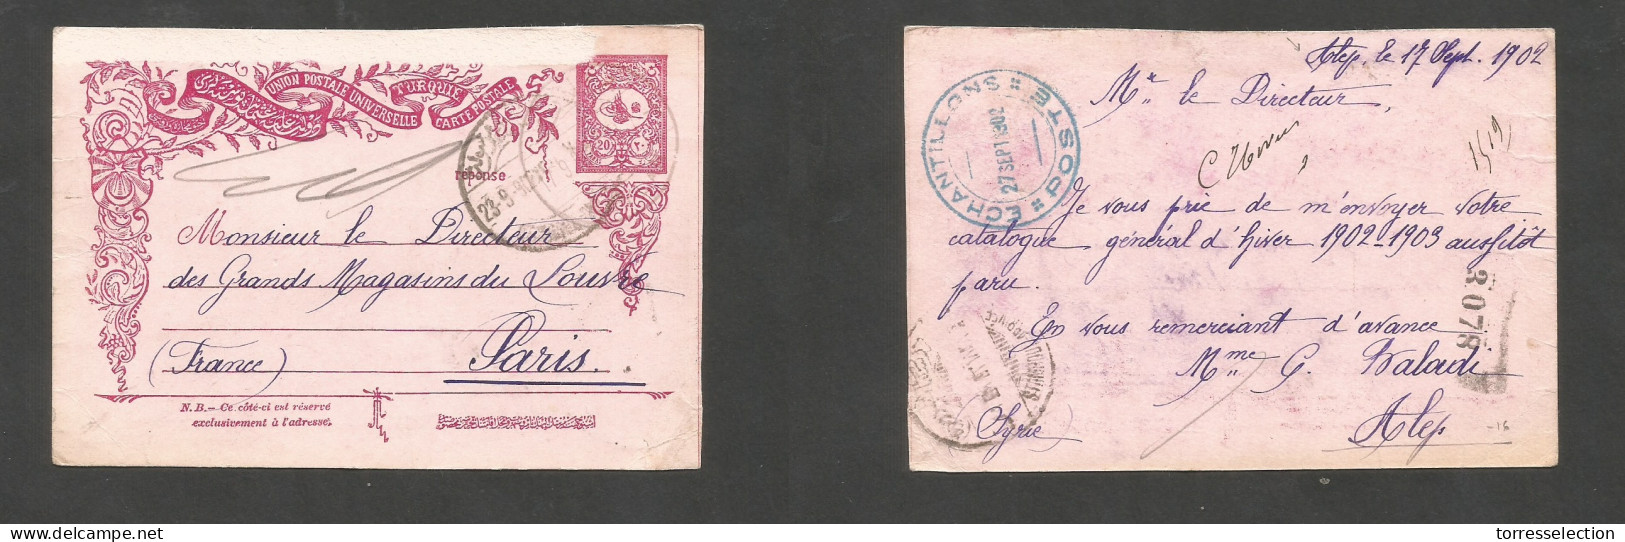 PERSIA. 1902 (17 Sept) Turkish PO Alep - France, Paris (27 Sept) 20 Para Red / Pink Stat Card Bilingual Cachet. SALE. - Iran